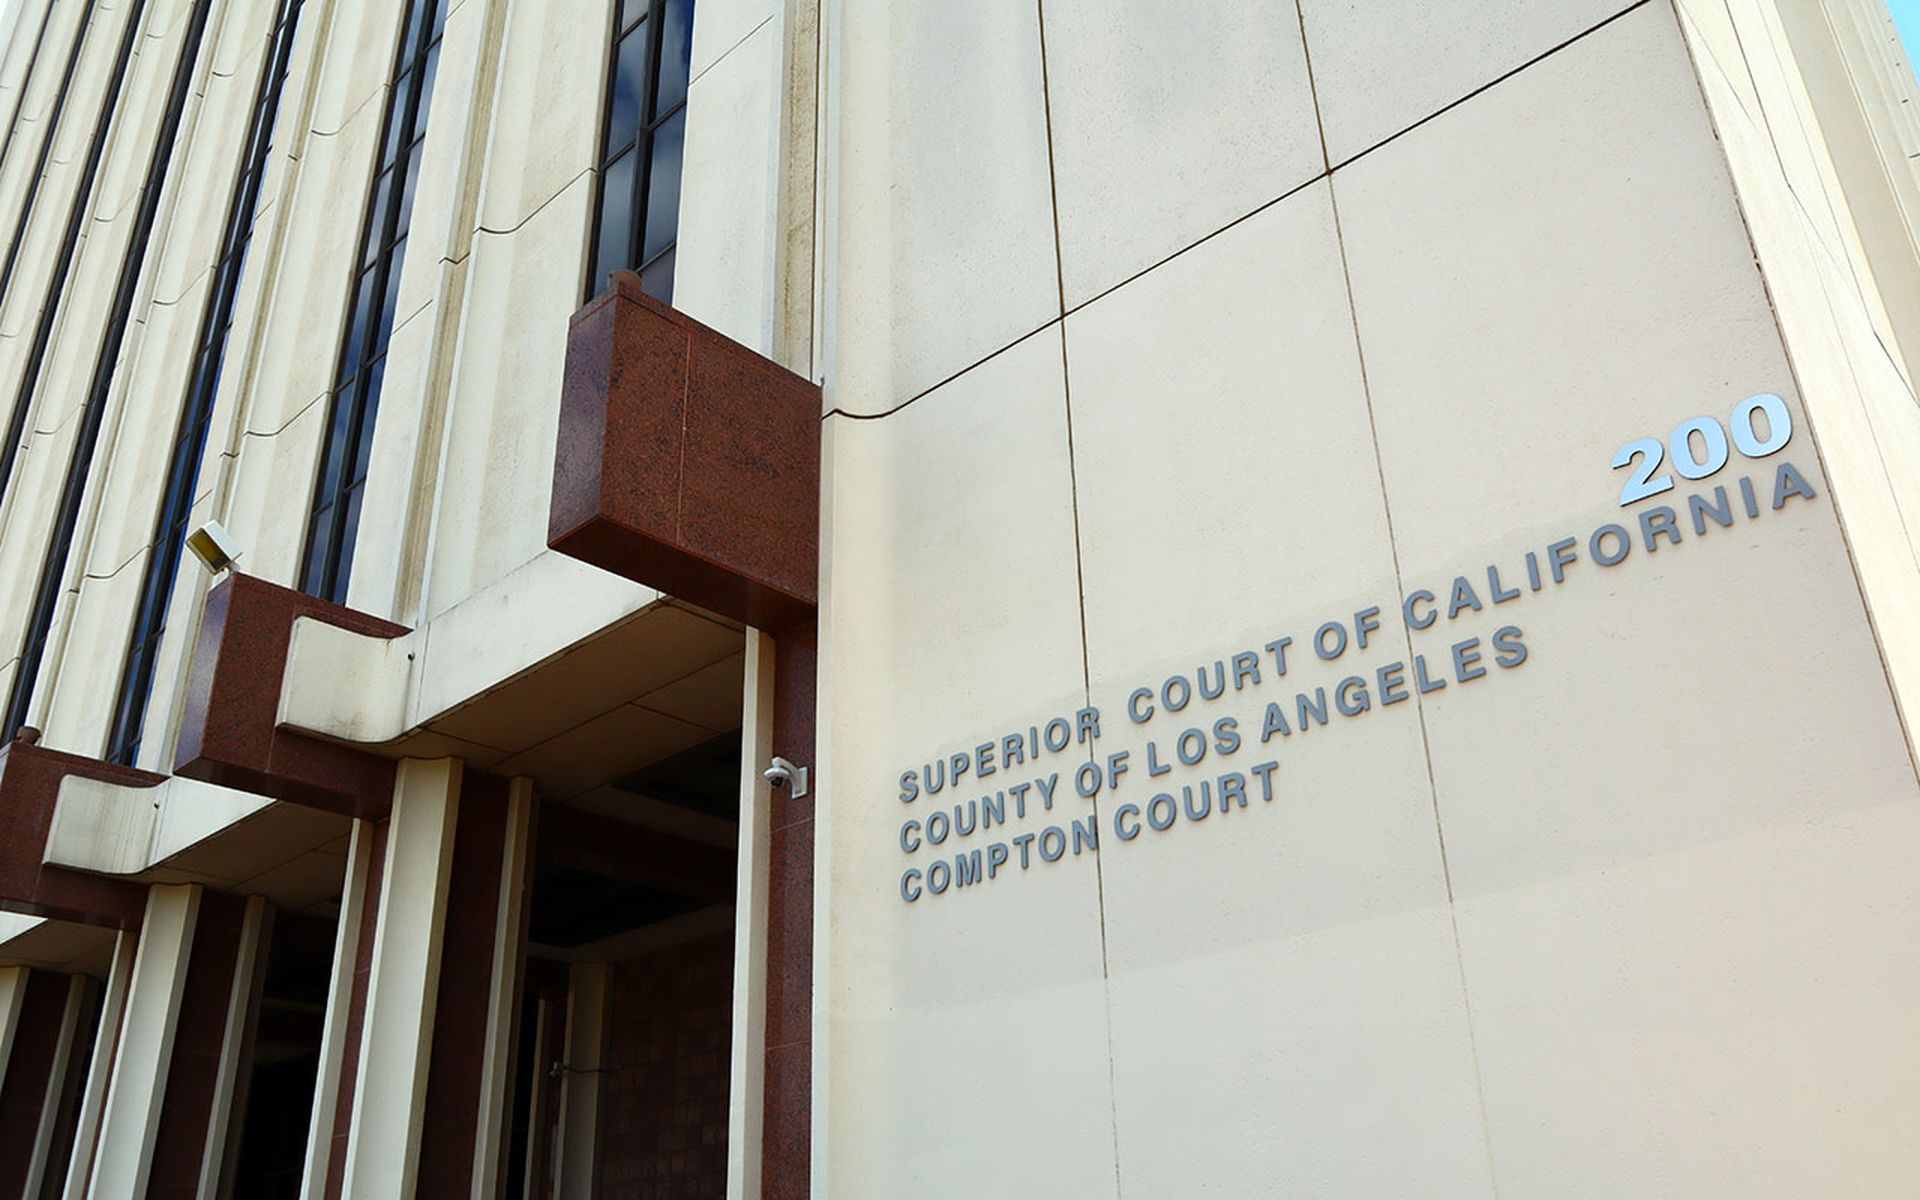 COMPTON (Los Angeles County), California: Superior Court of California